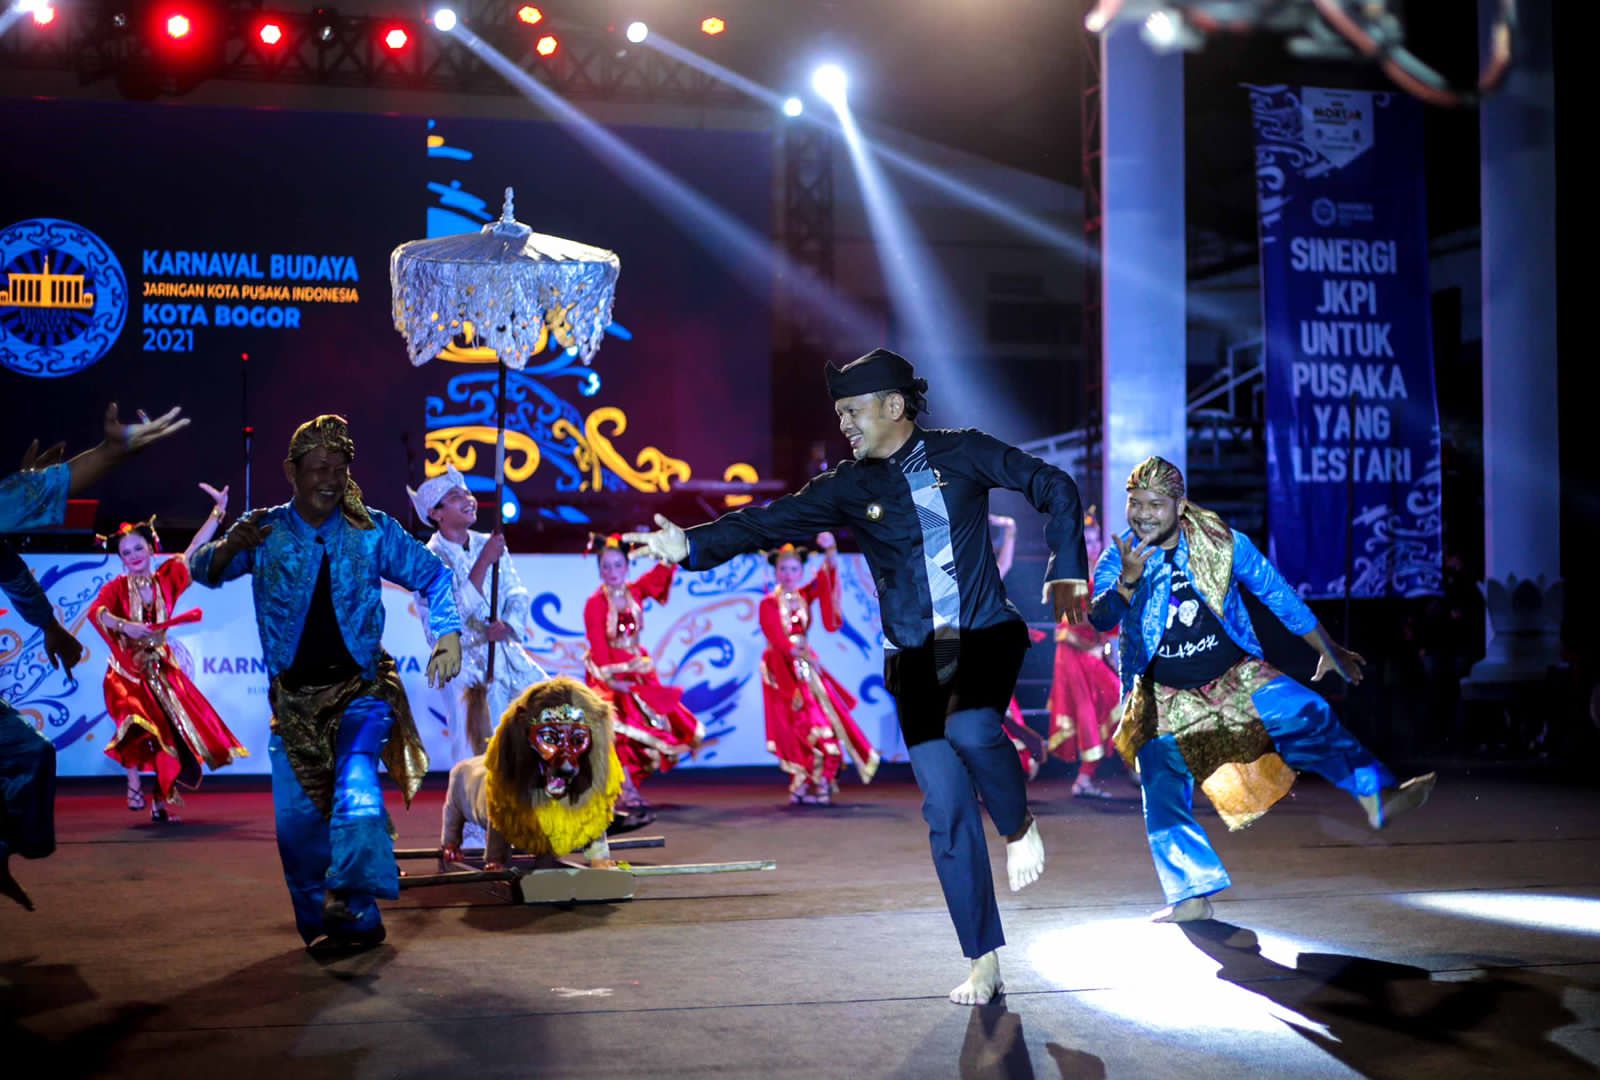 Karnaval budaya dalam acara Jaringan Kota Pusaka Indonesia.